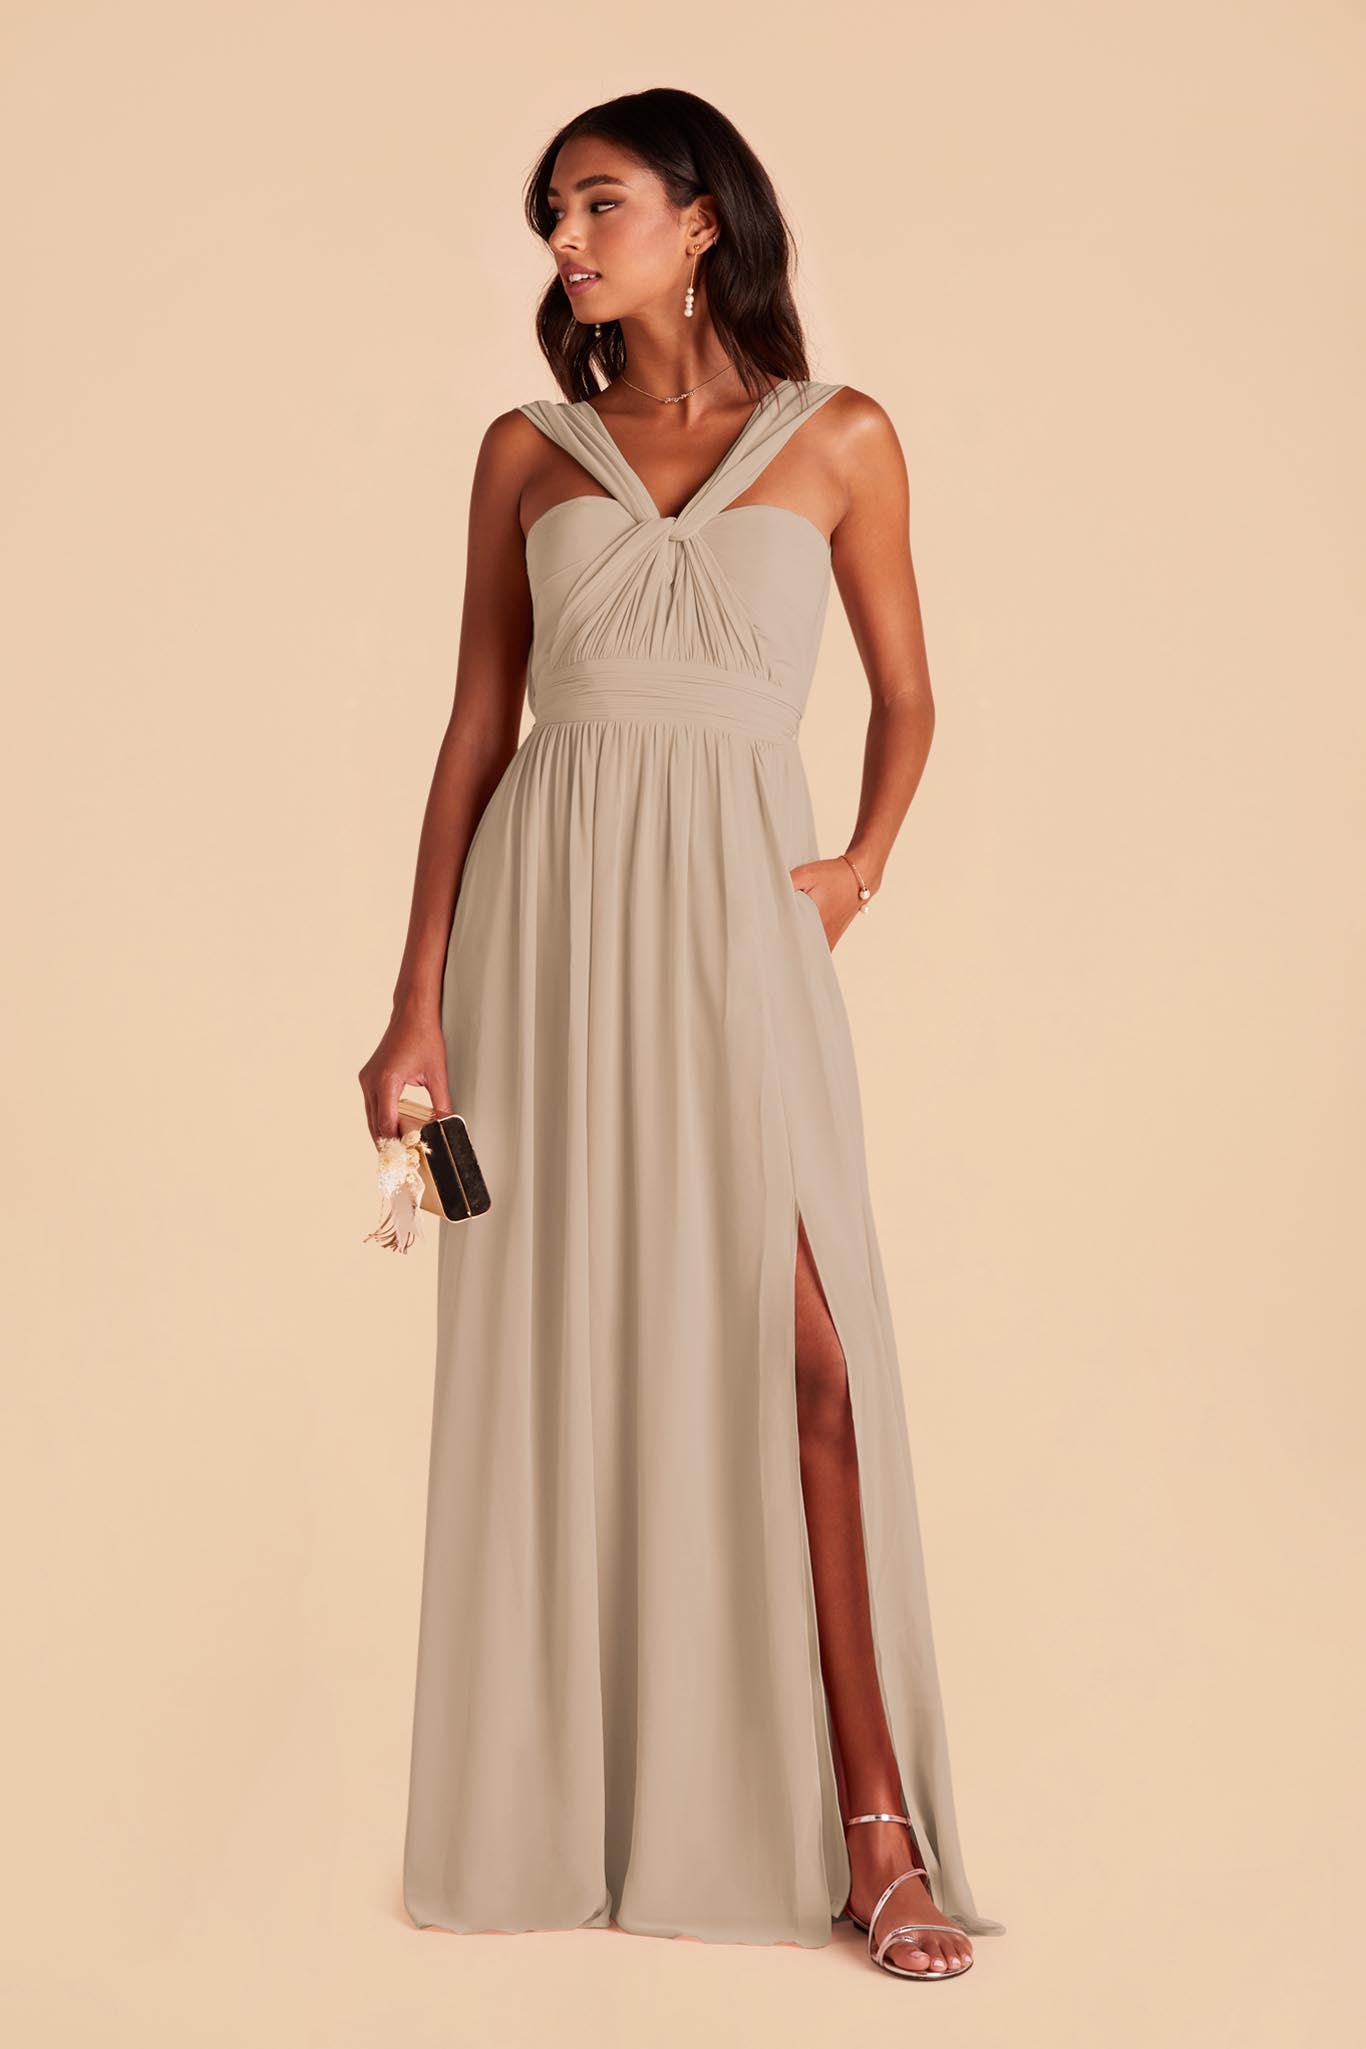 Almond Grace Convertible Dress by Birdy Grey